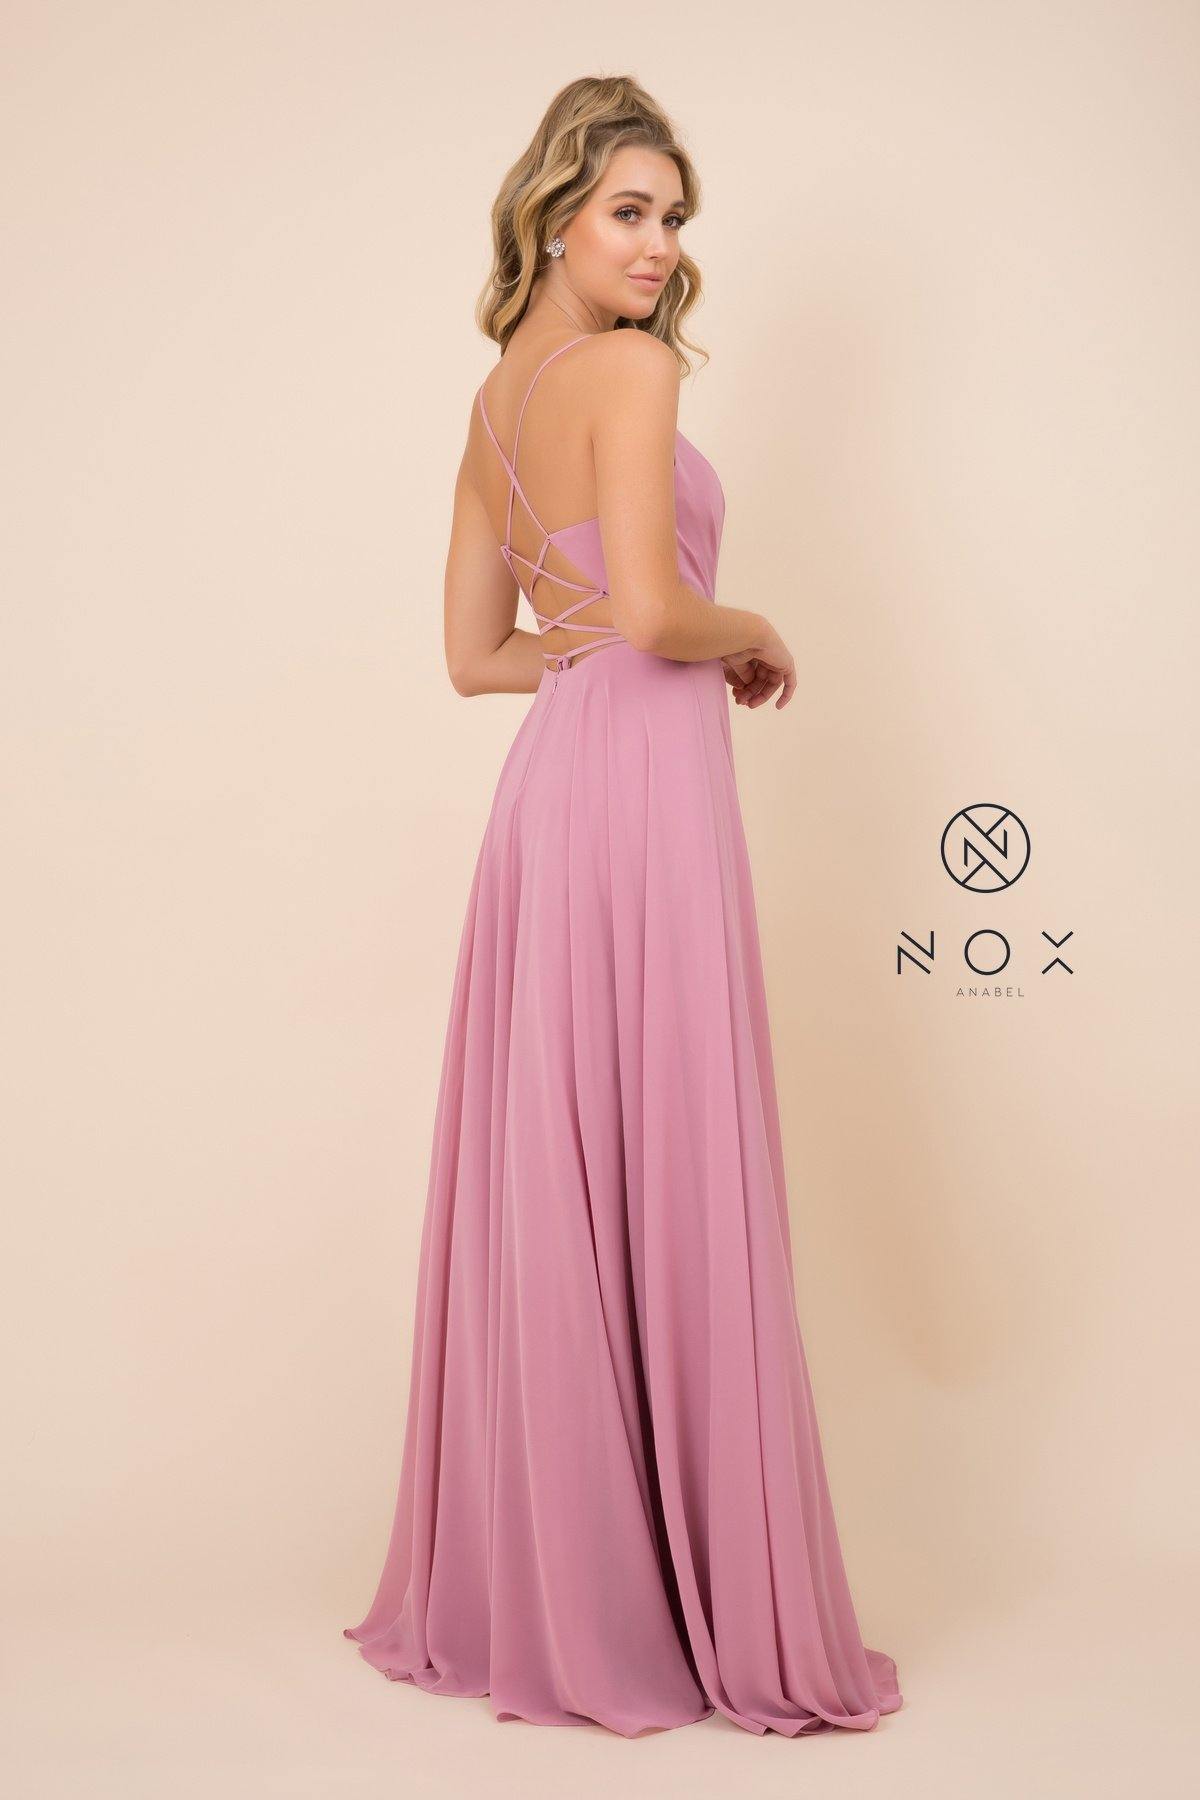 Long Deep V-Neck Dress Prom Dress - The Dress Outlet Nox Anabel